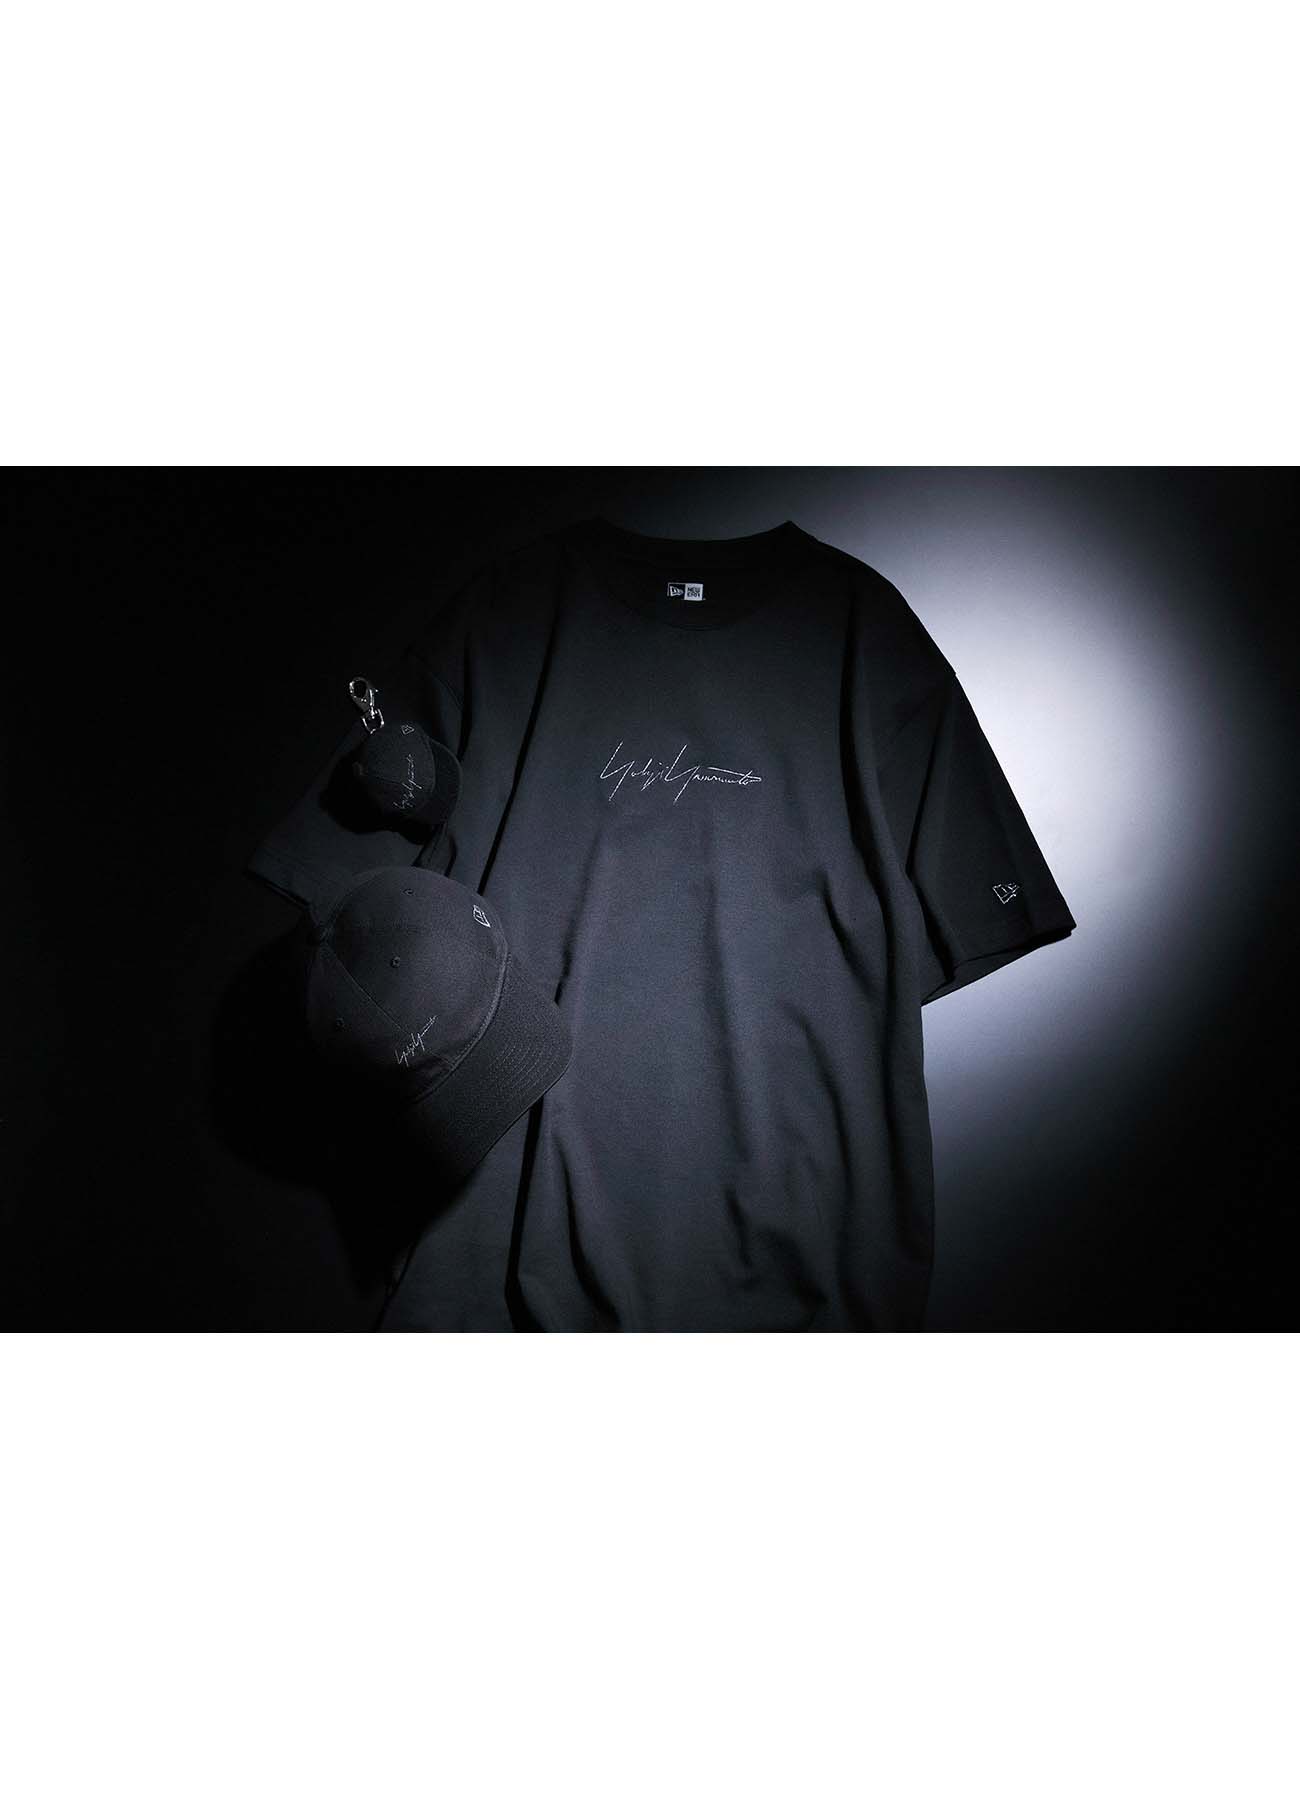 Yohji Yamamoto × New Era METALLIC BLACK SIGNATURE CAP KEY HOLDER